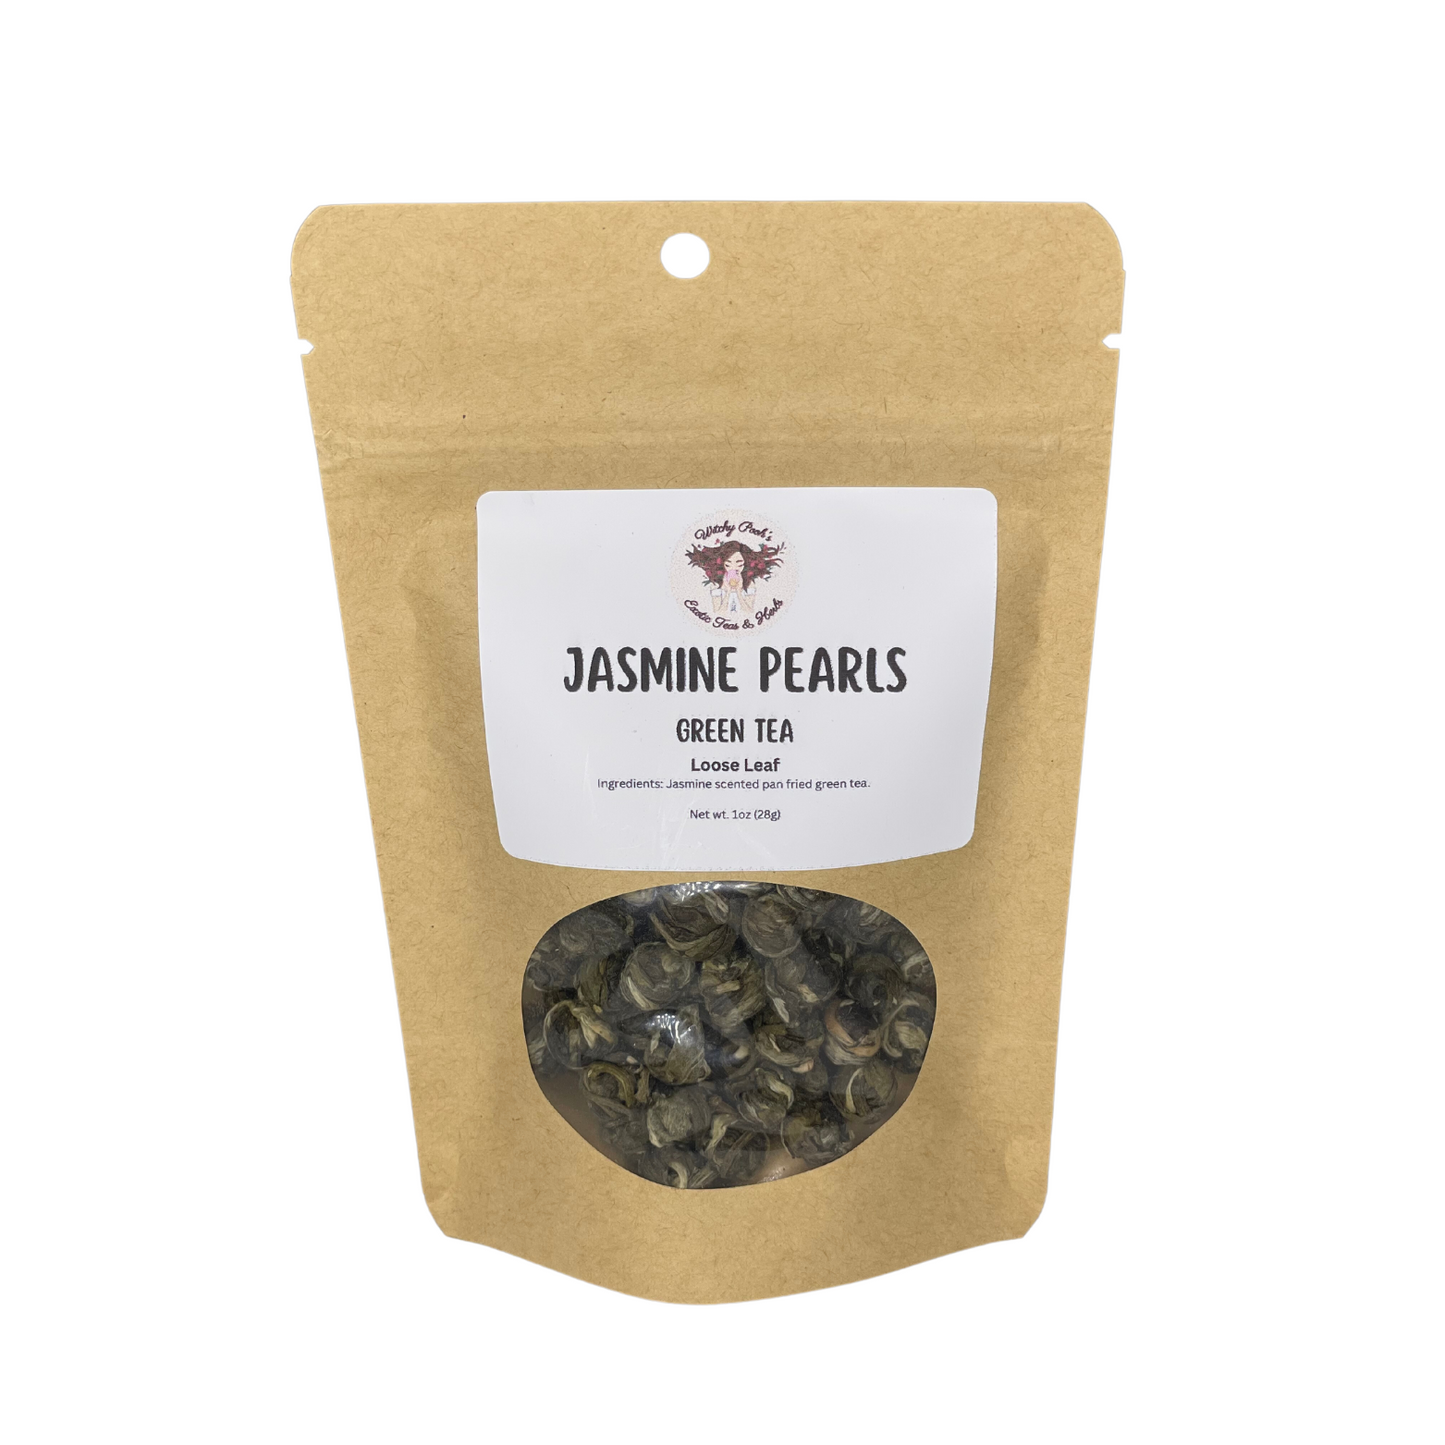 Witchy Pooh's Jasmine Pearls, Dragon Pearls, Loose Leaf Jasmine scented Pan Fried Sencha Green Tea